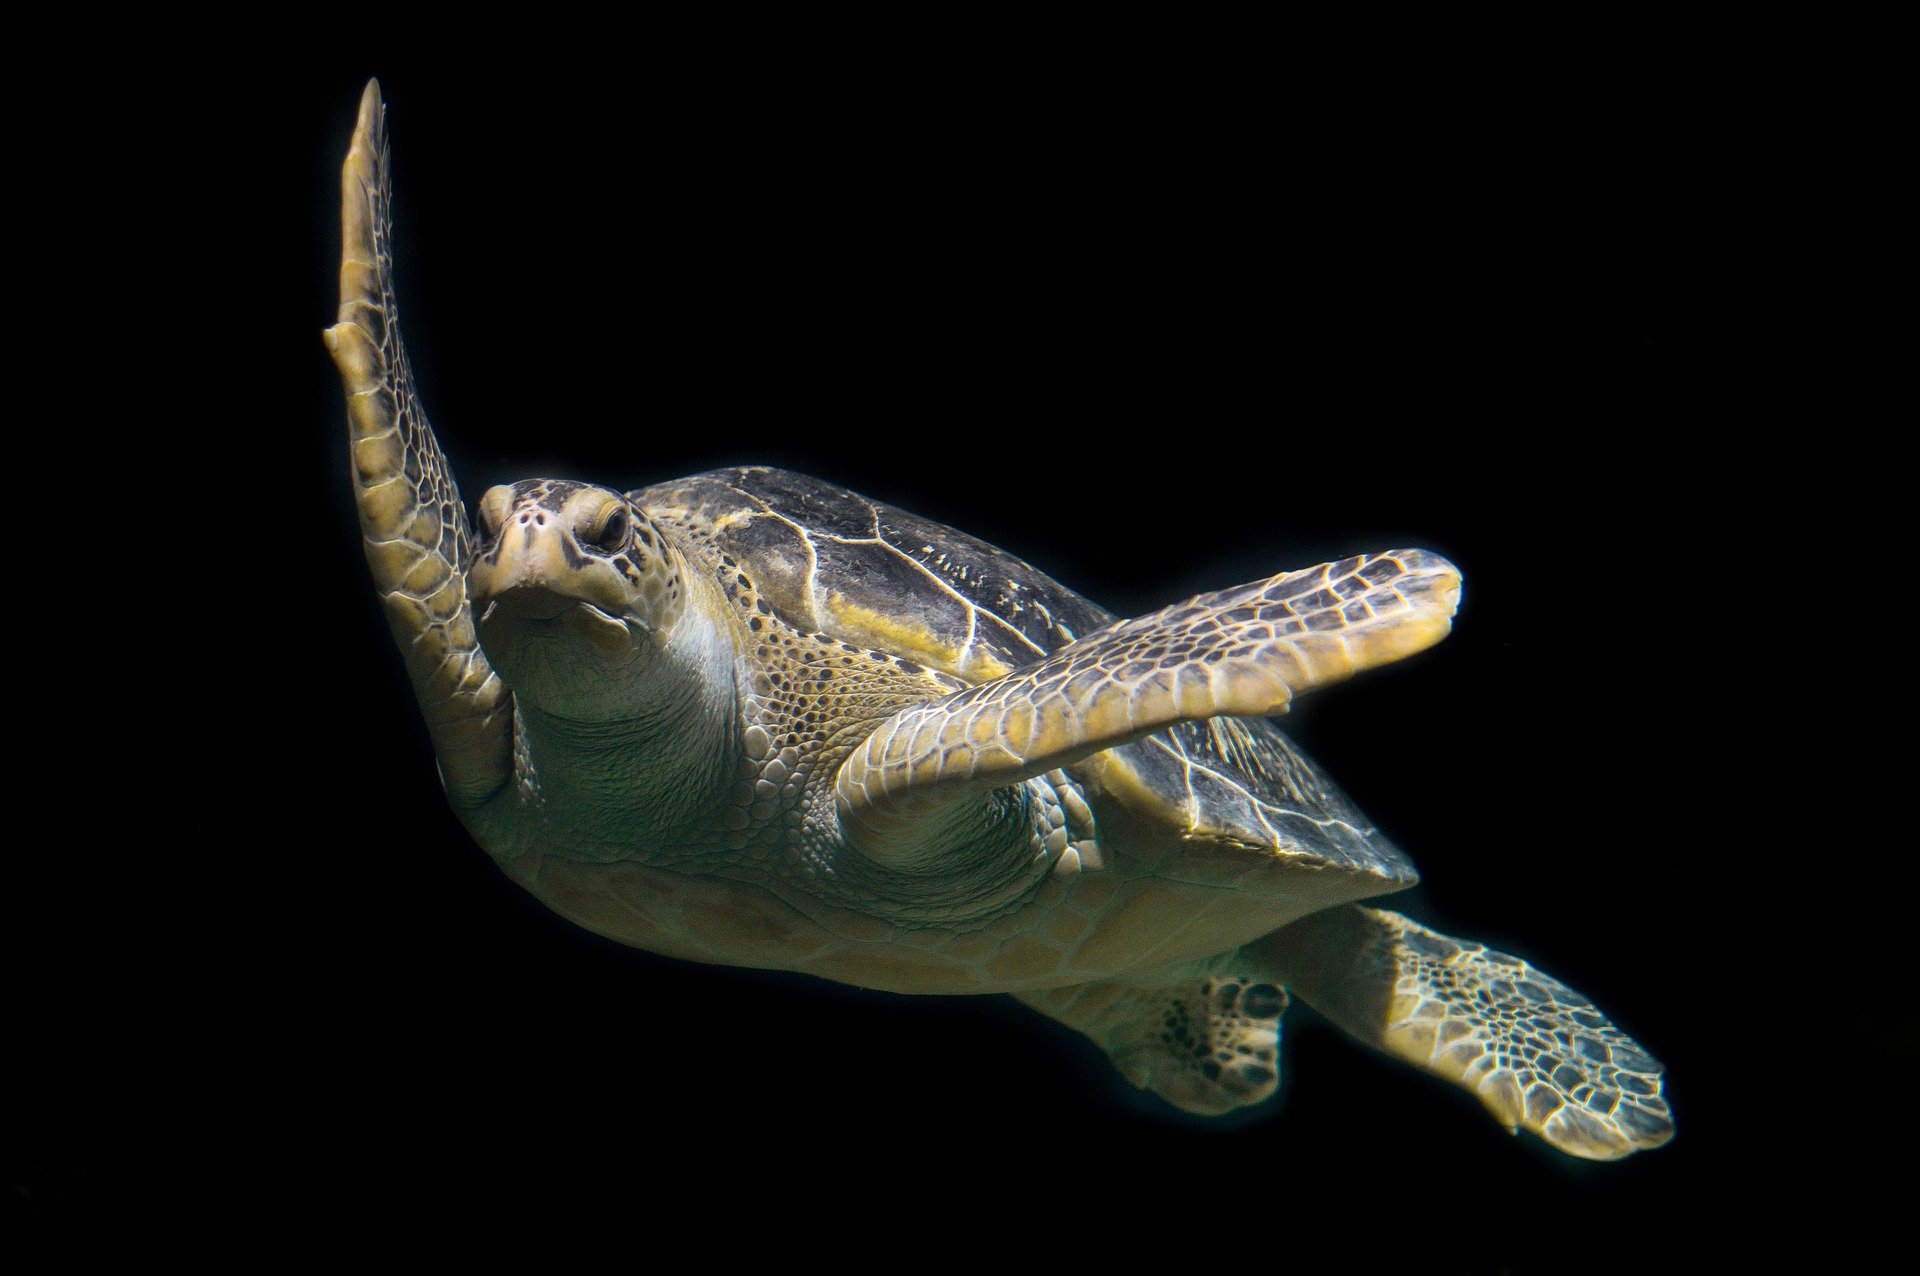 Endangered green sea turtles threaten fish population in Lakshadweep seas